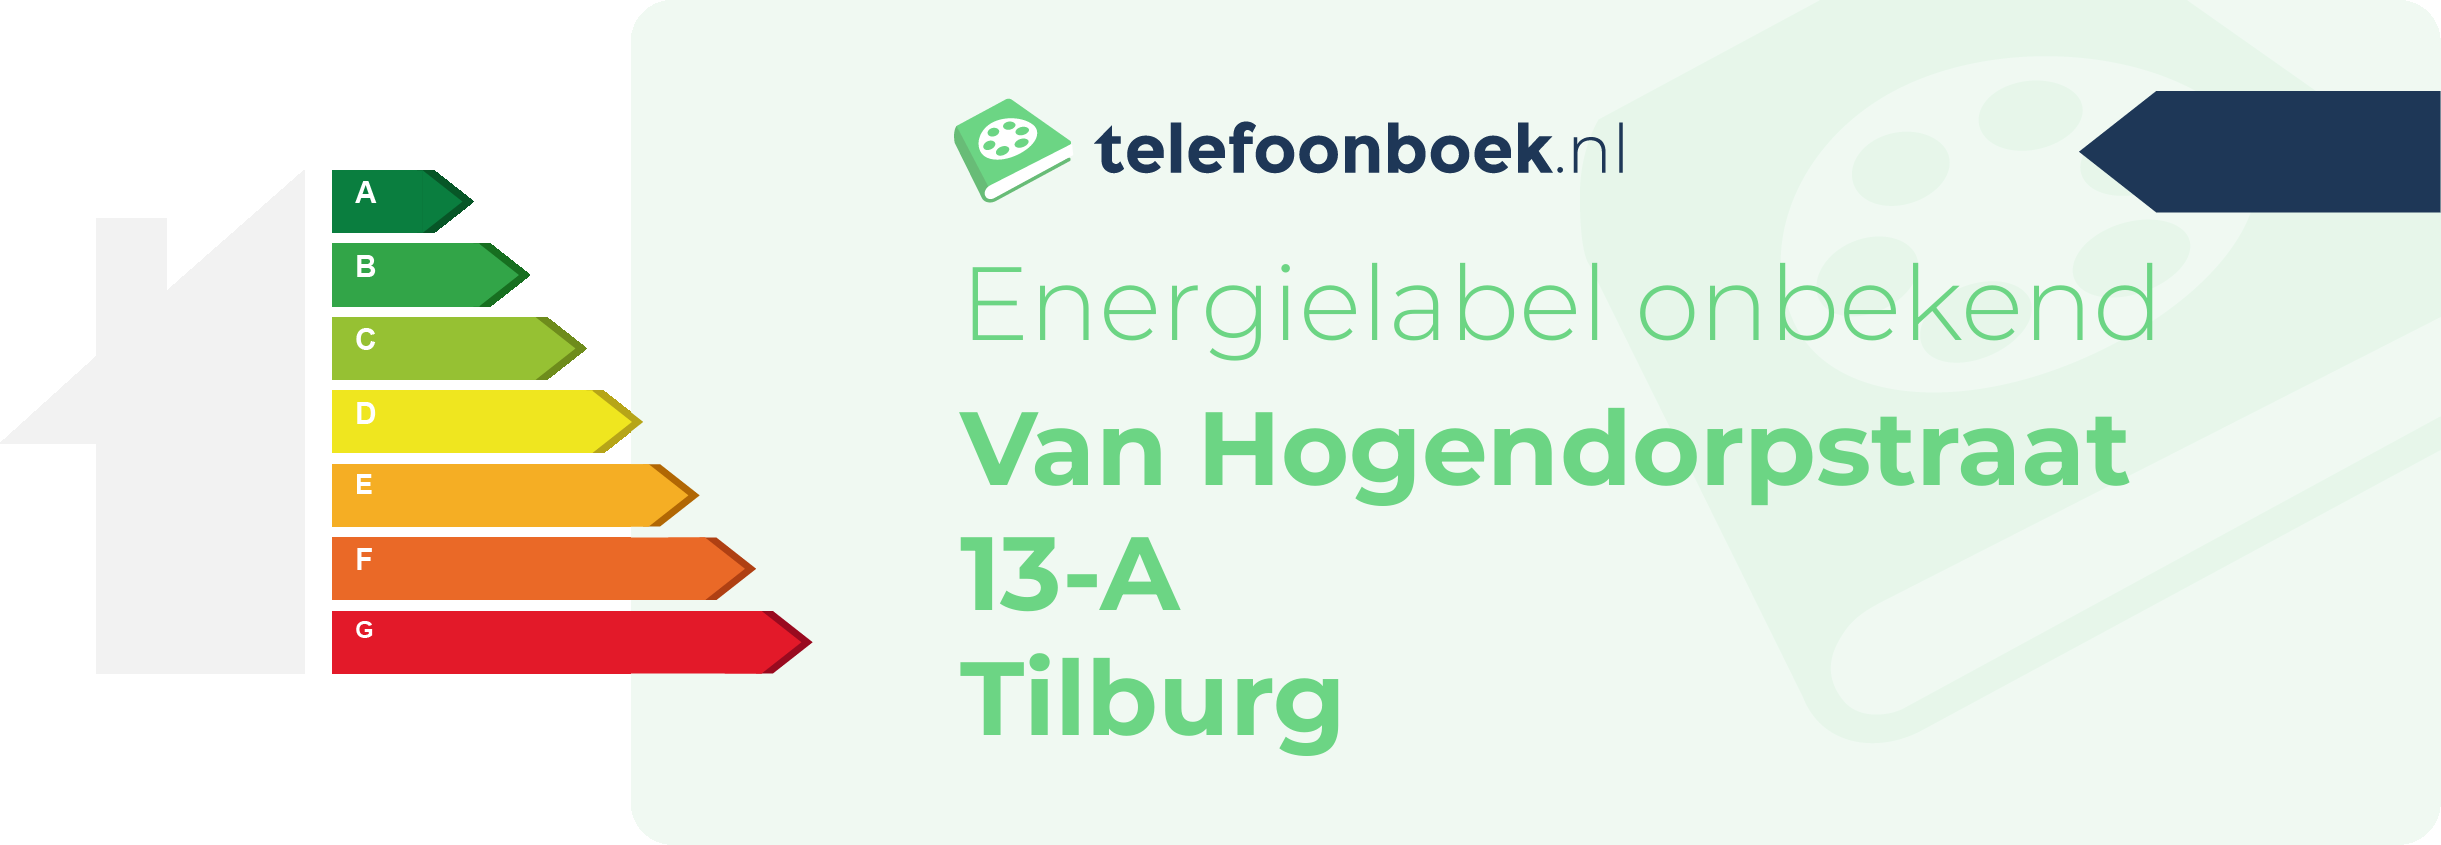 Energielabel Van Hogendorpstraat 13-A Tilburg